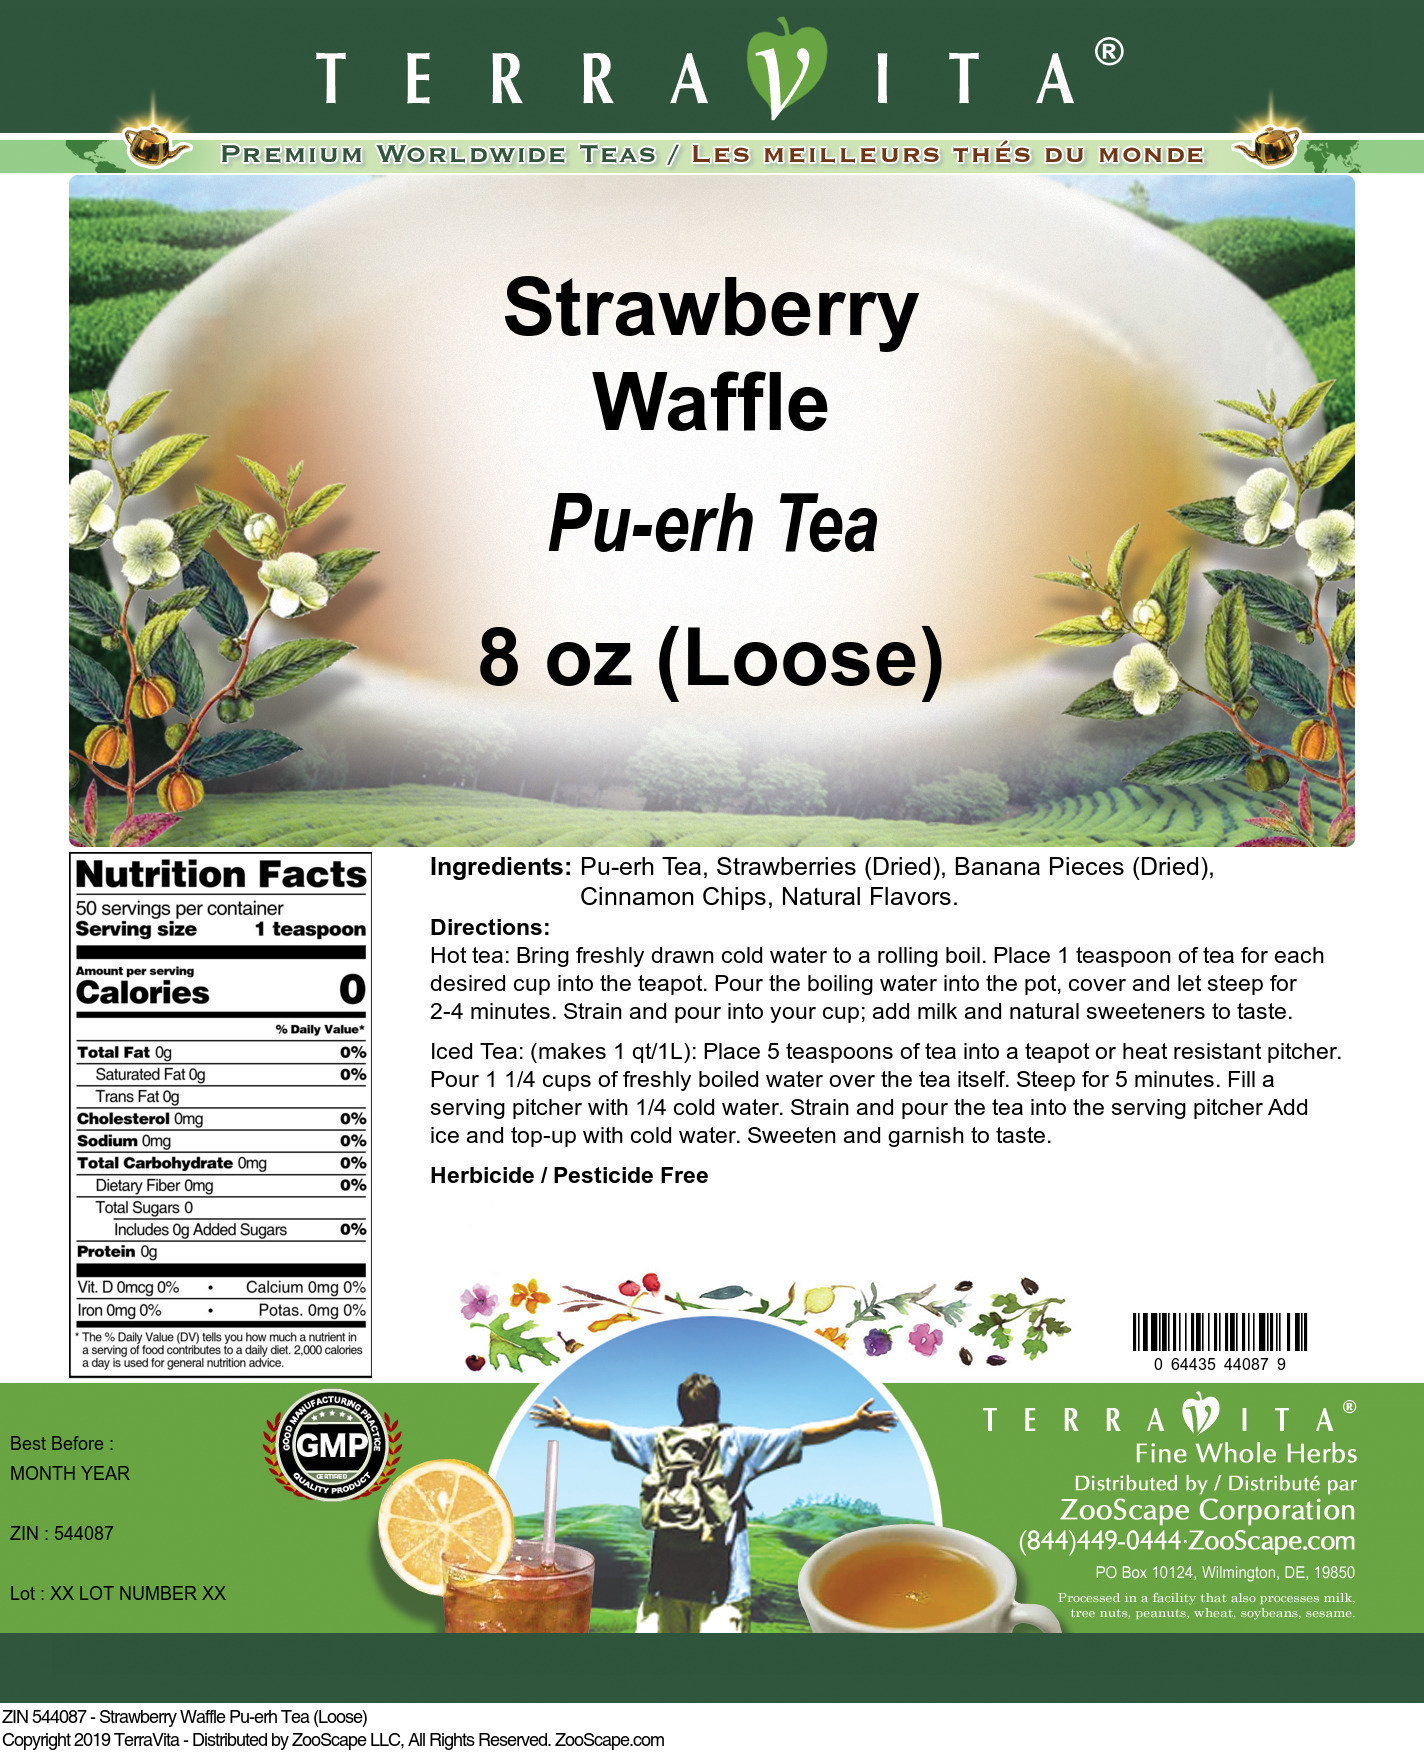 Strawberry Waffle Pu-erh Tea (Loose) - Label